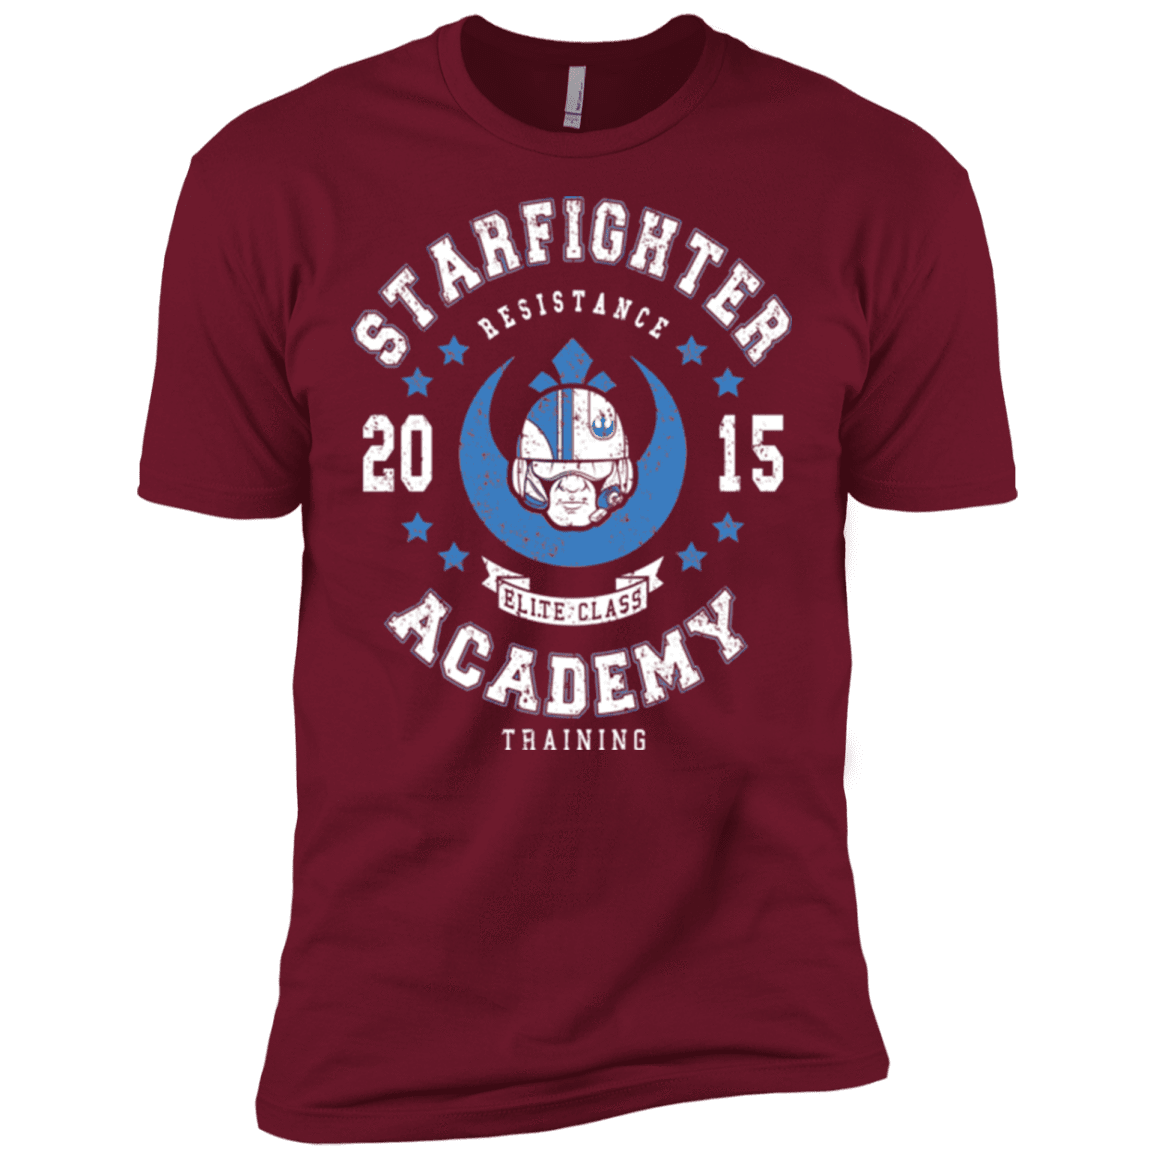 T-Shirts Cardinal / X-Small Starfighter Academy 15 Men's Premium T-Shirt